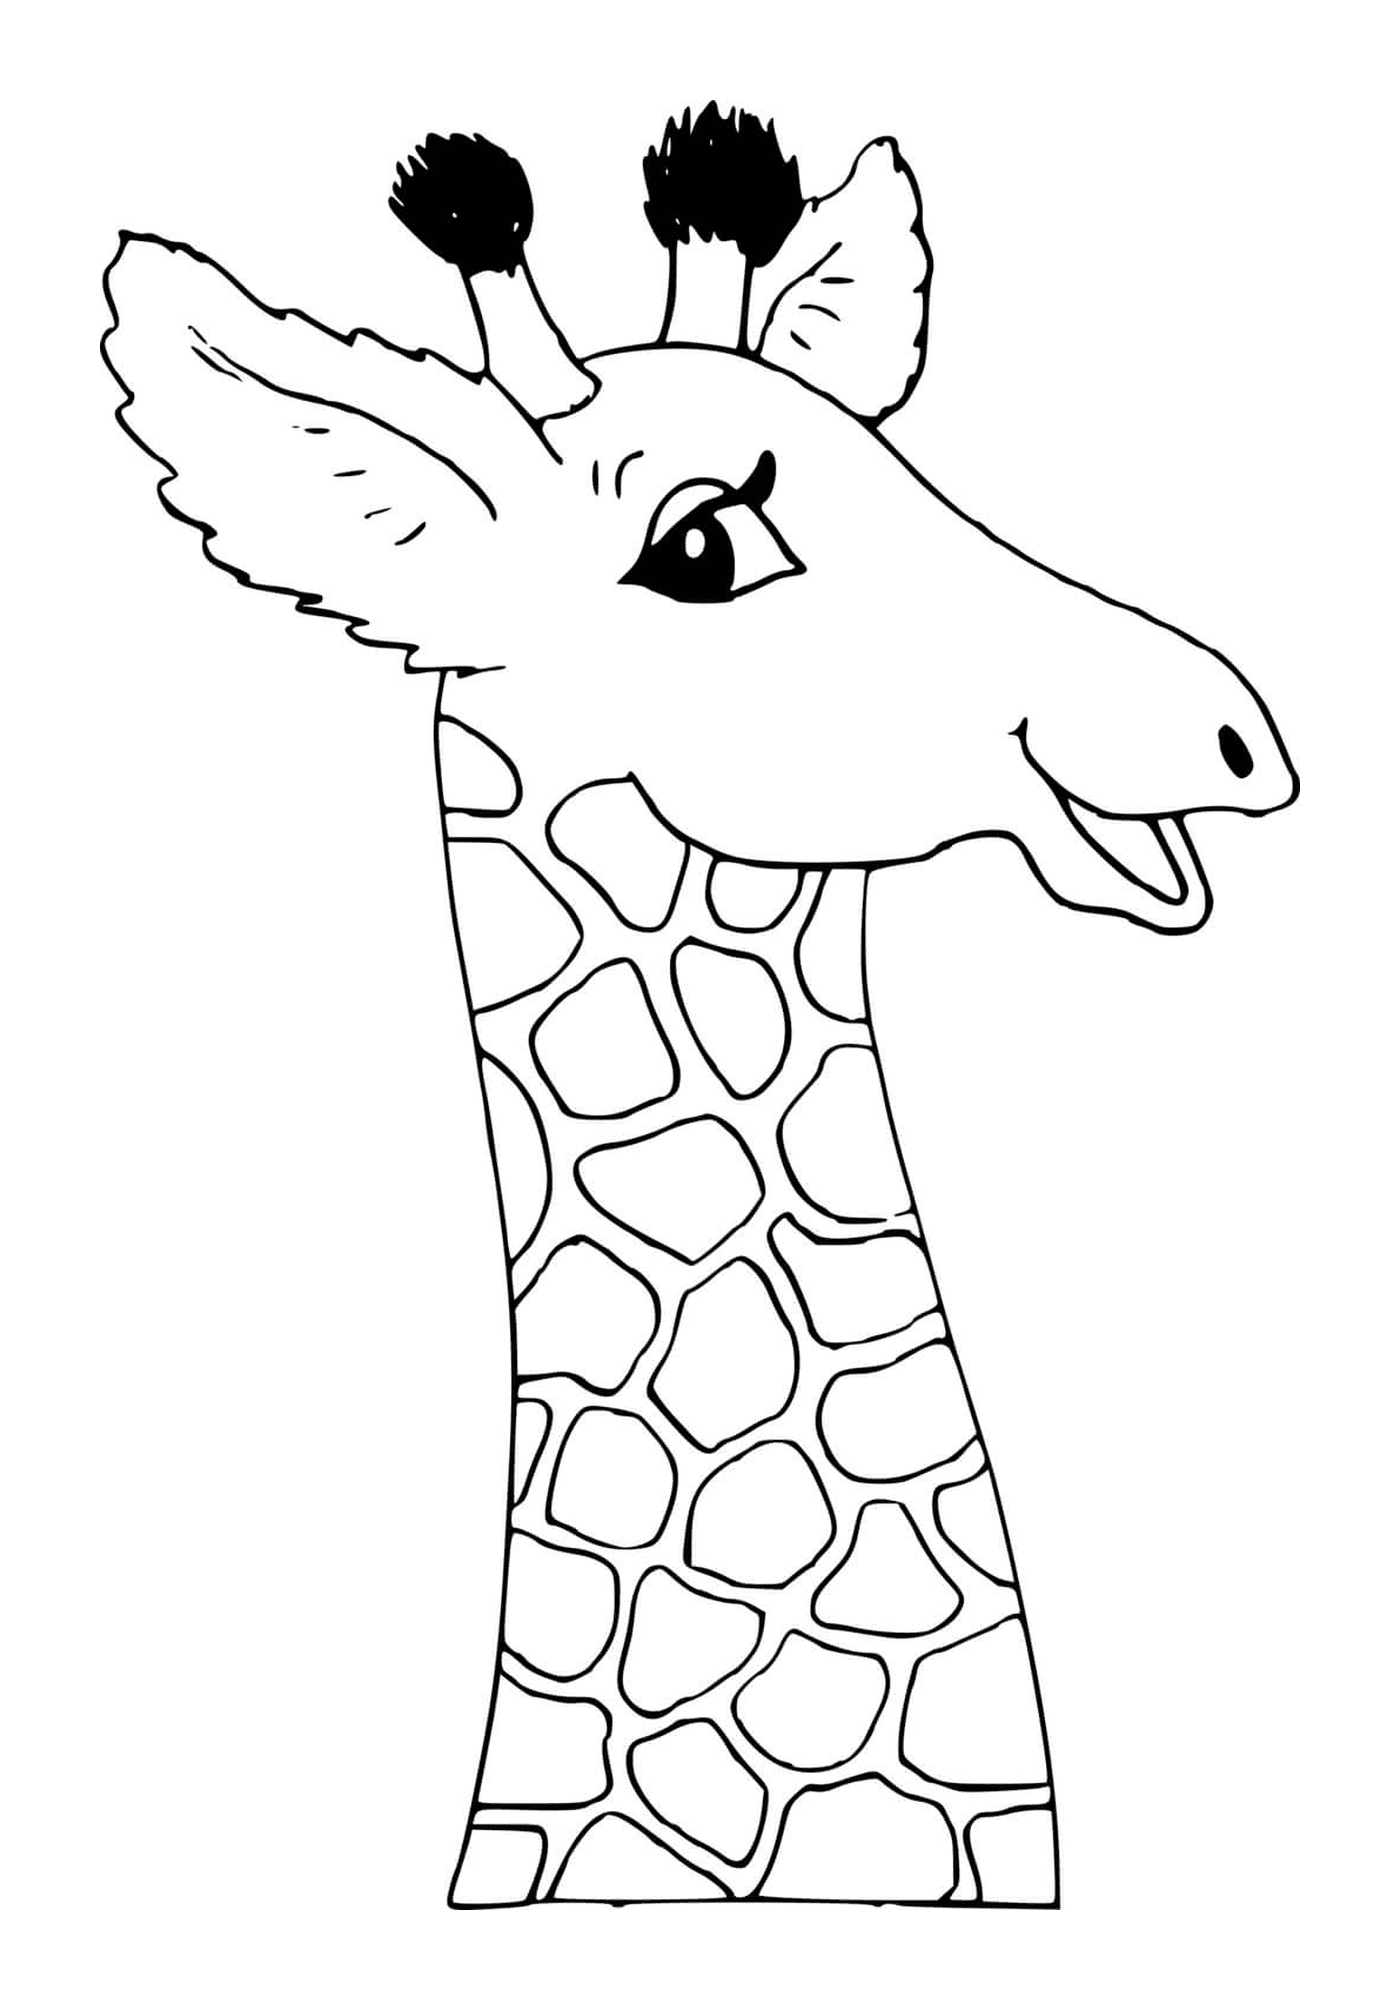  Cuello y cabeza de jirafa 